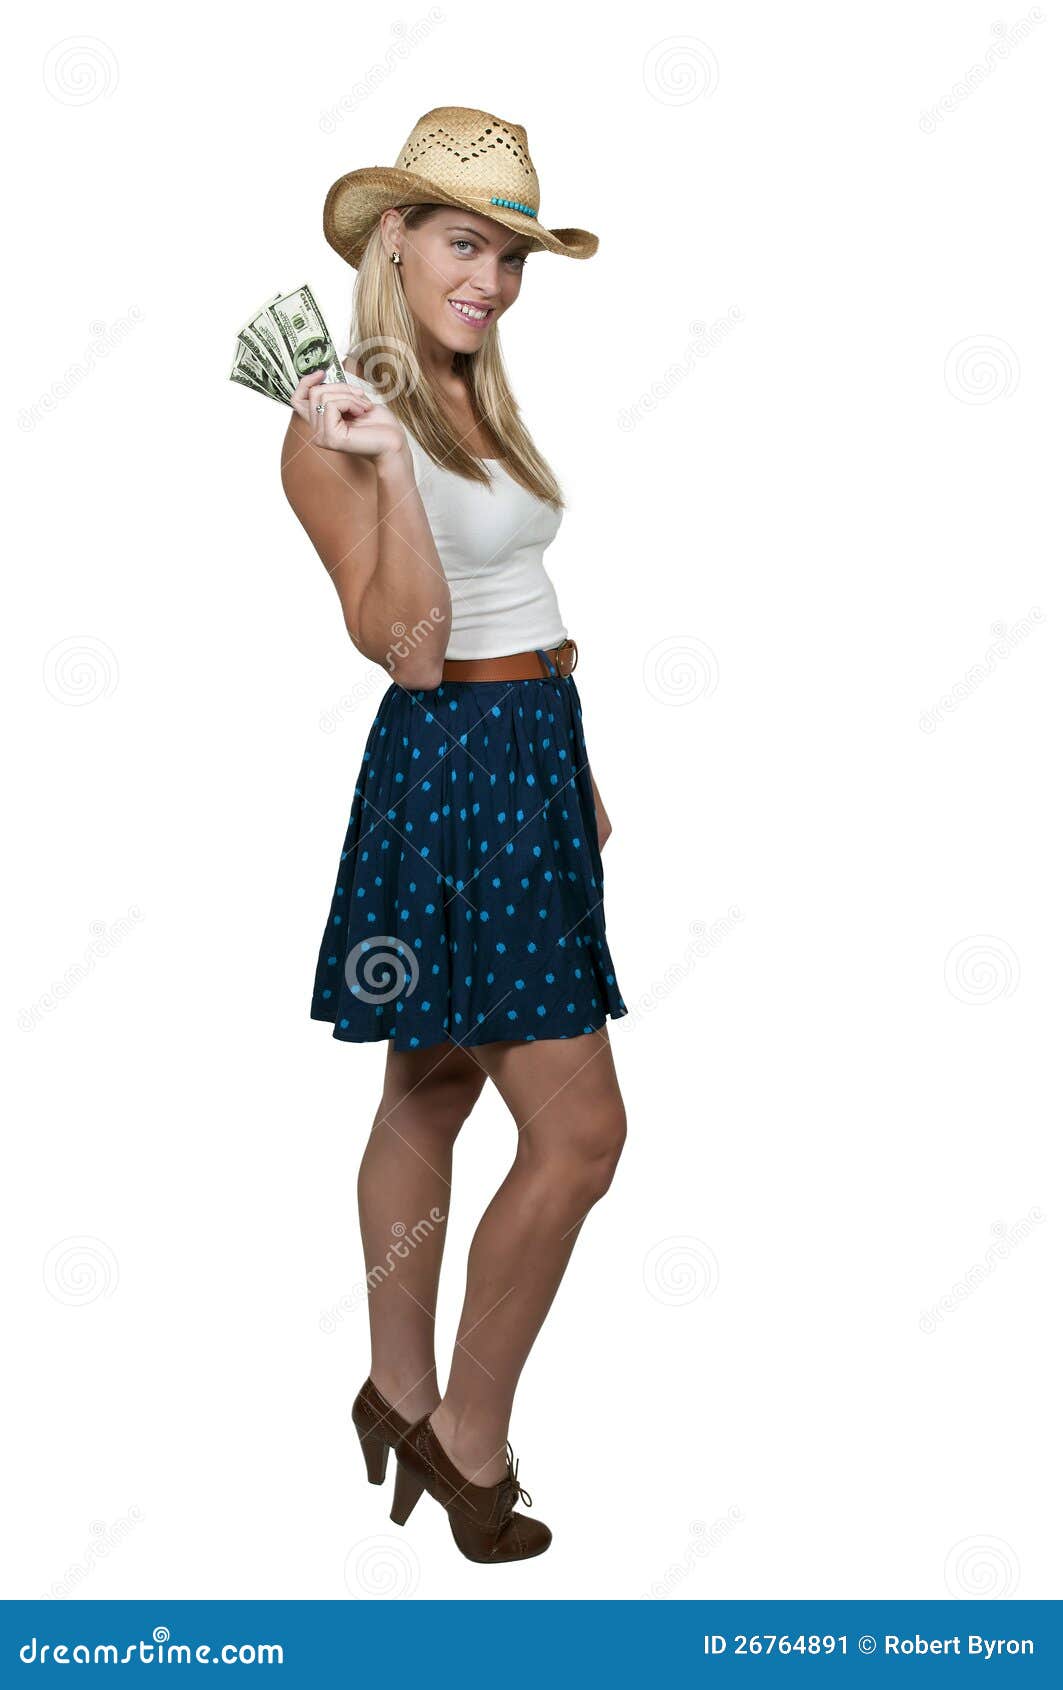 Woman Holding 100 Dollar Bills. Beautiful woman holding a hand full of 100 dollar bills